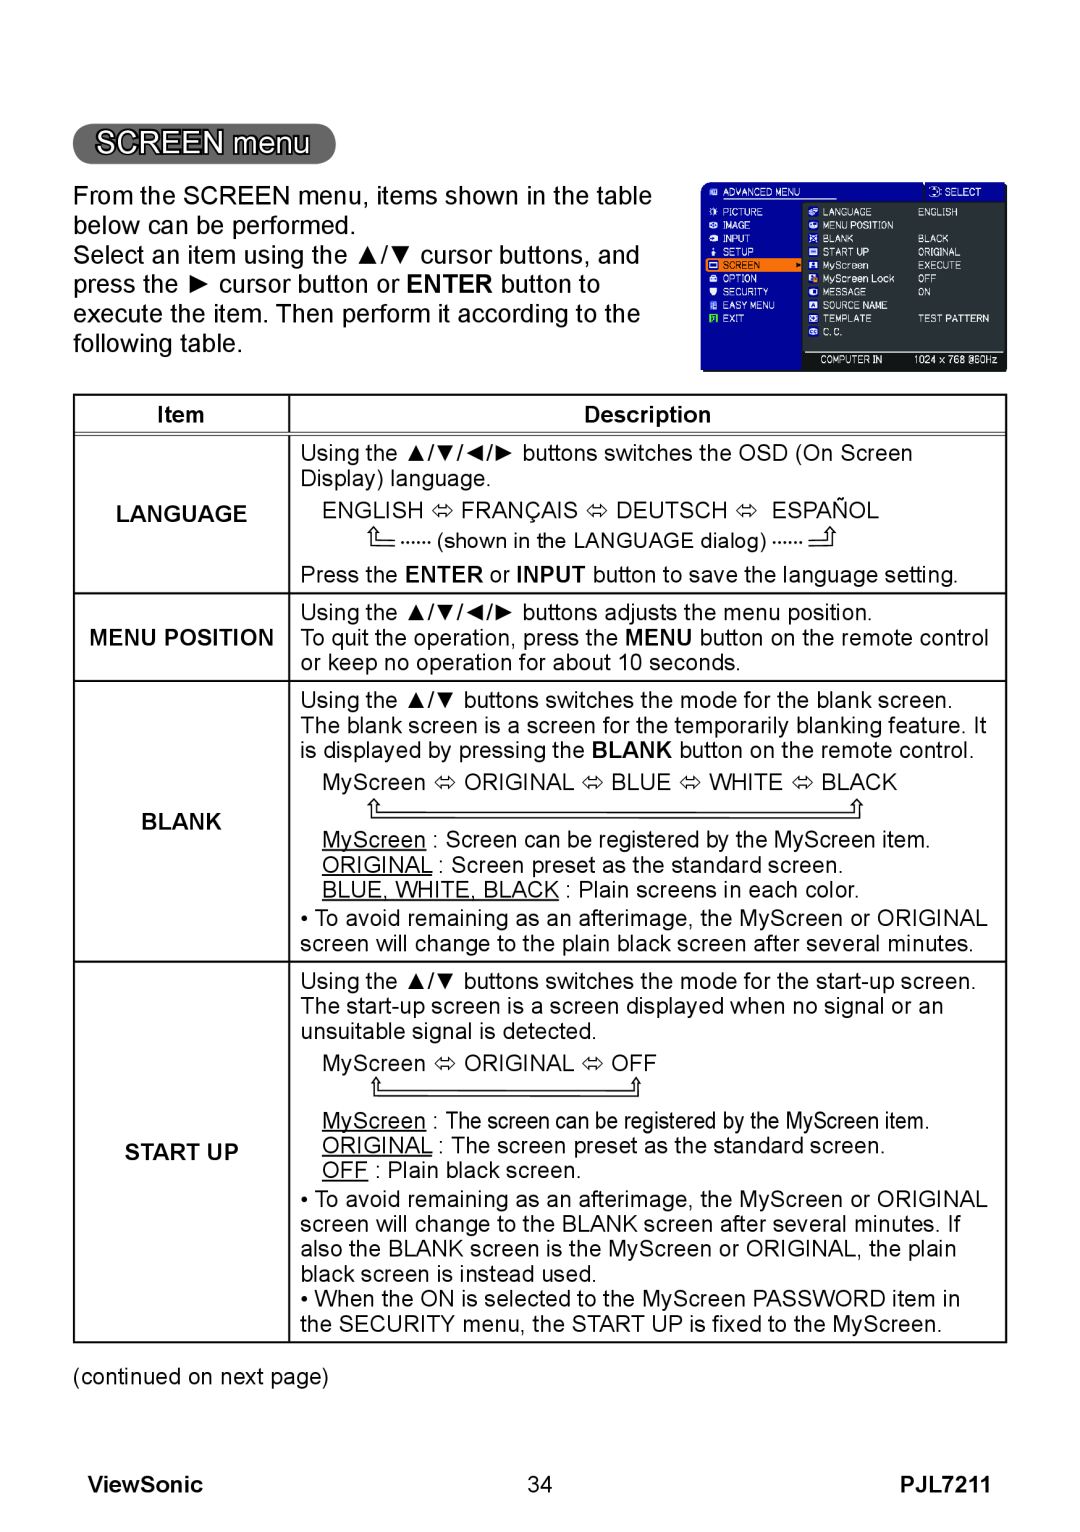 ViewSonic PJL7211 manual SCREEN menu, Item, Description, Language, Blank, Start Up, ViewSonic 